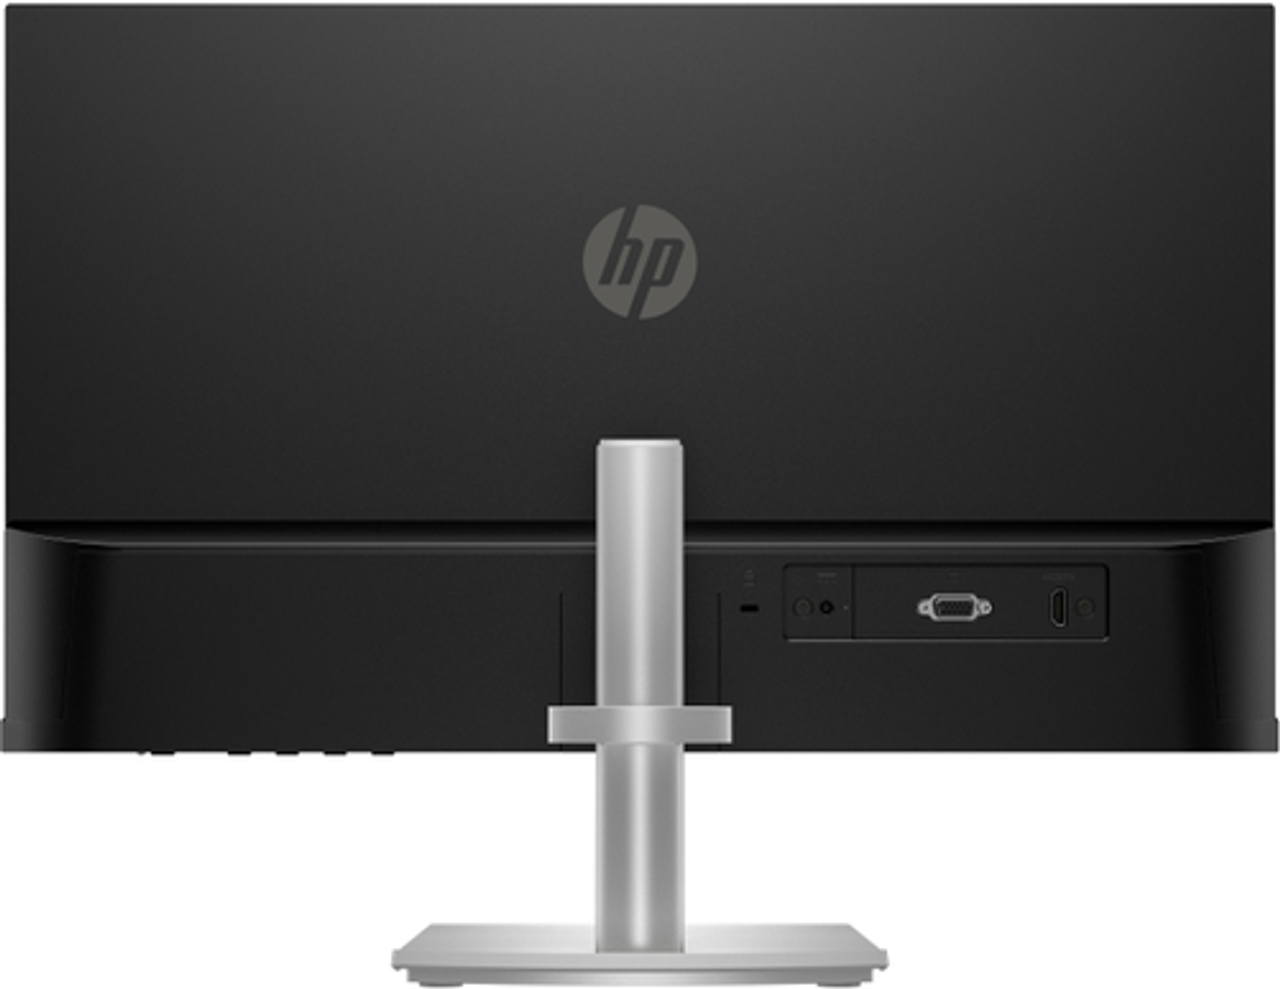 HP - 24" IPS LED FHD FreeSync Monitor (HDMI, VGA) - Silver & Black